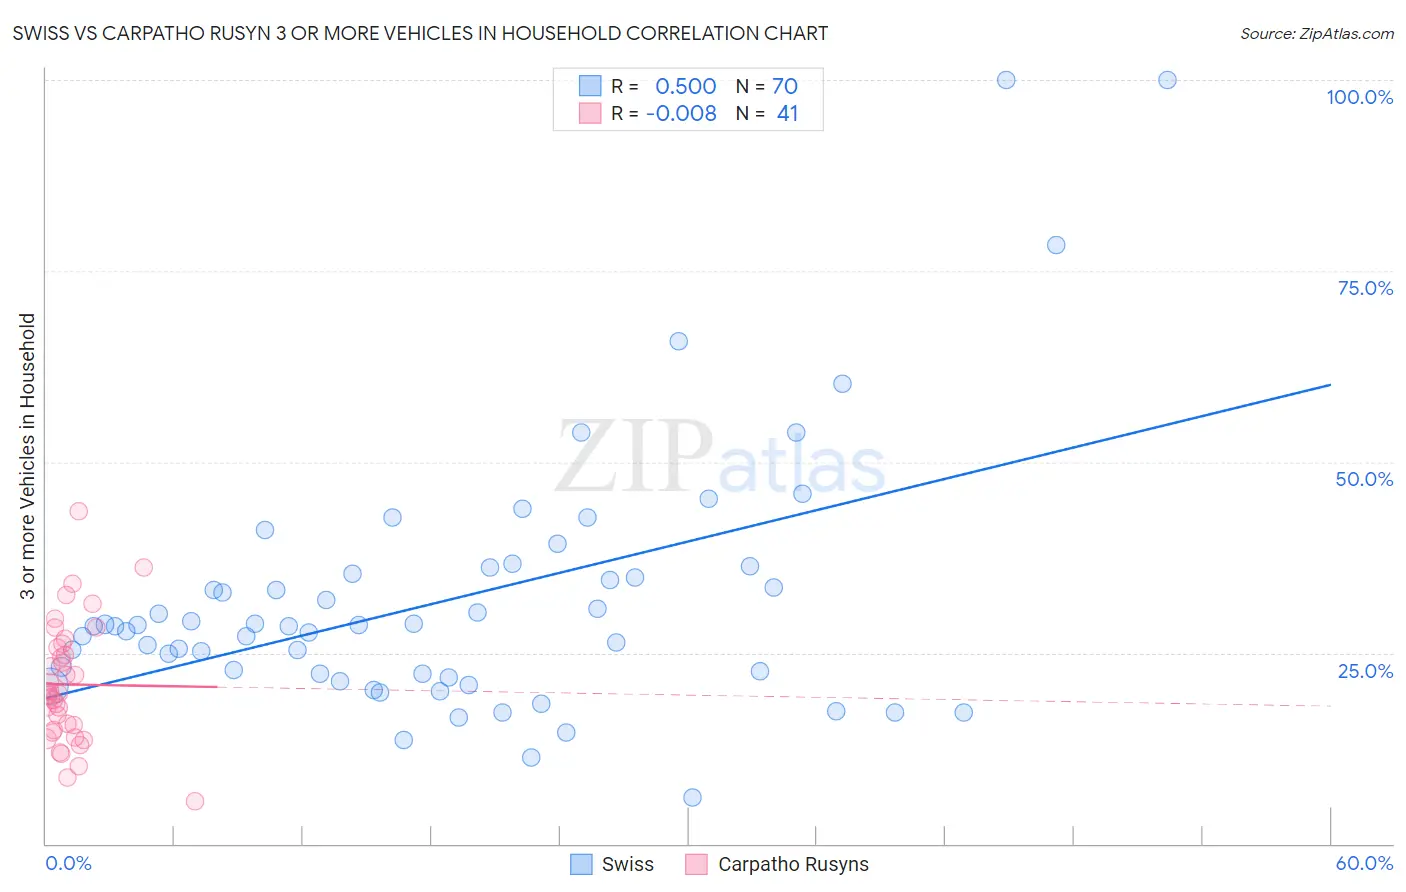 Swiss vs Carpatho Rusyn 3 or more Vehicles in Household